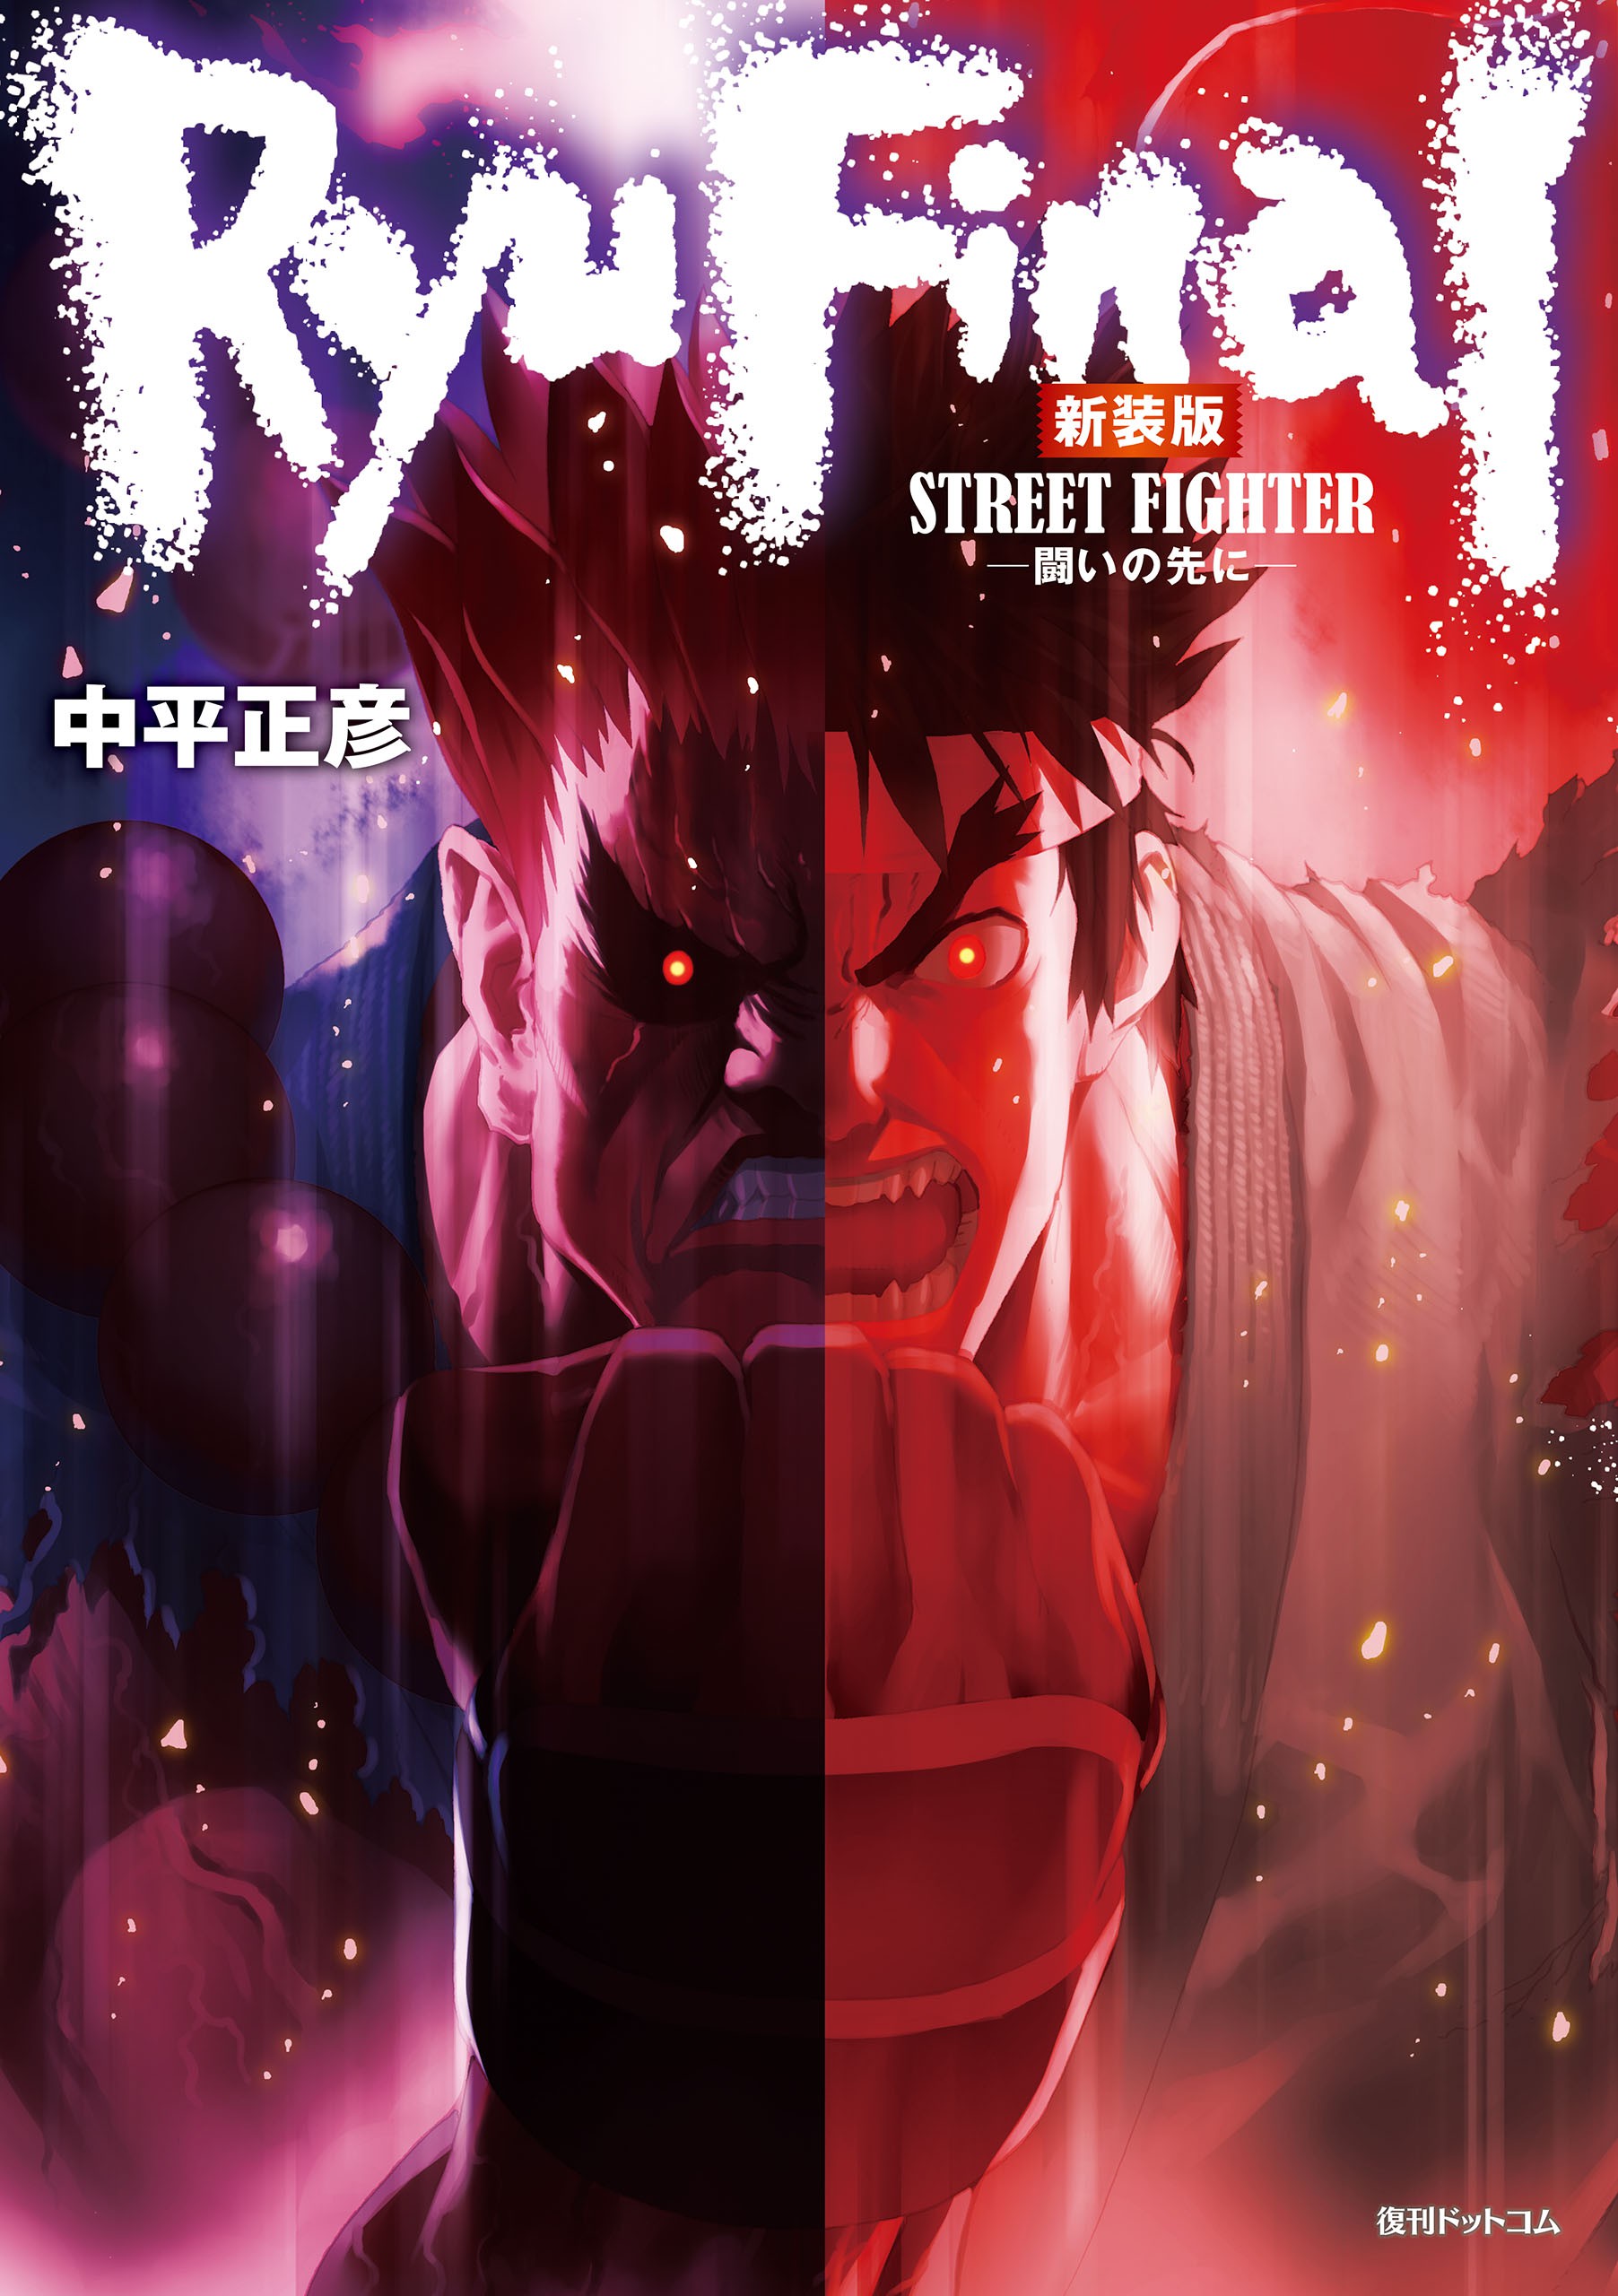 OCT073851 - STREET FIGHTER III MANGA TP VOL 01 RYU FINAL - Previews World